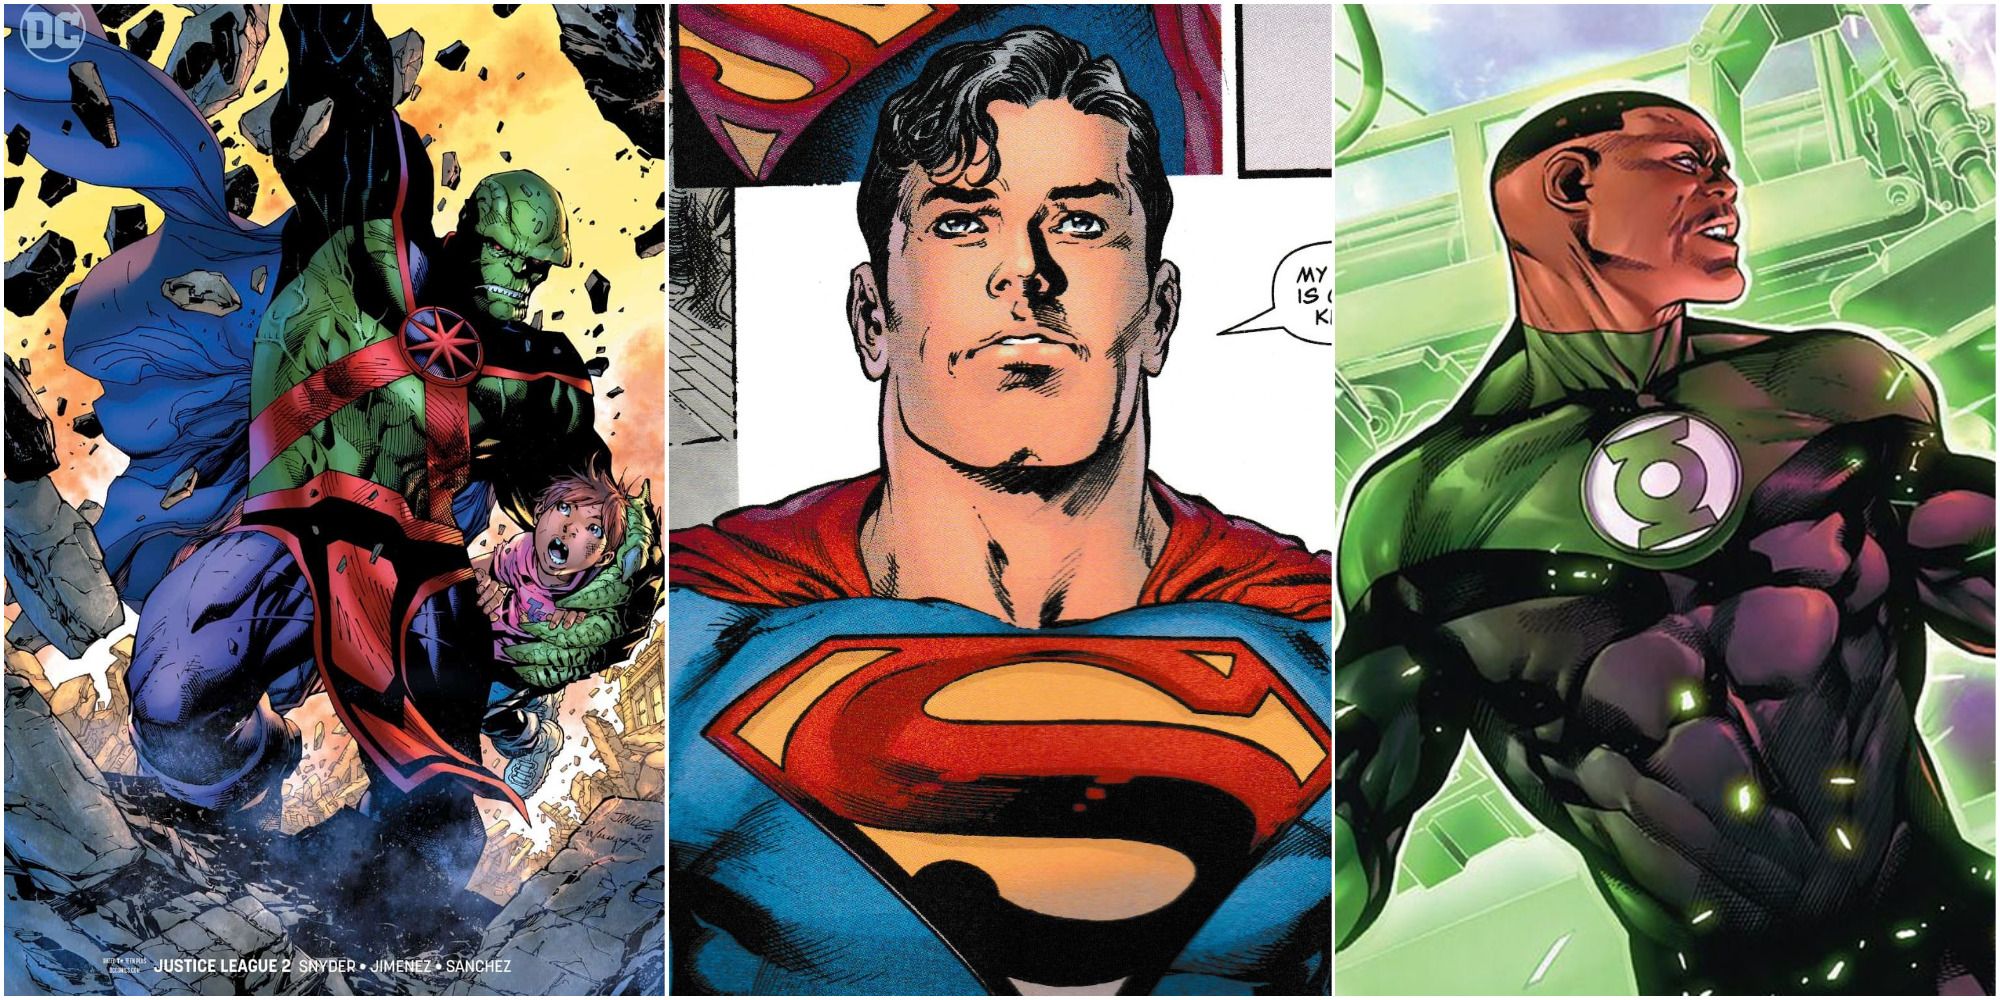 Martian Manhunter, Superman, and John Stewart